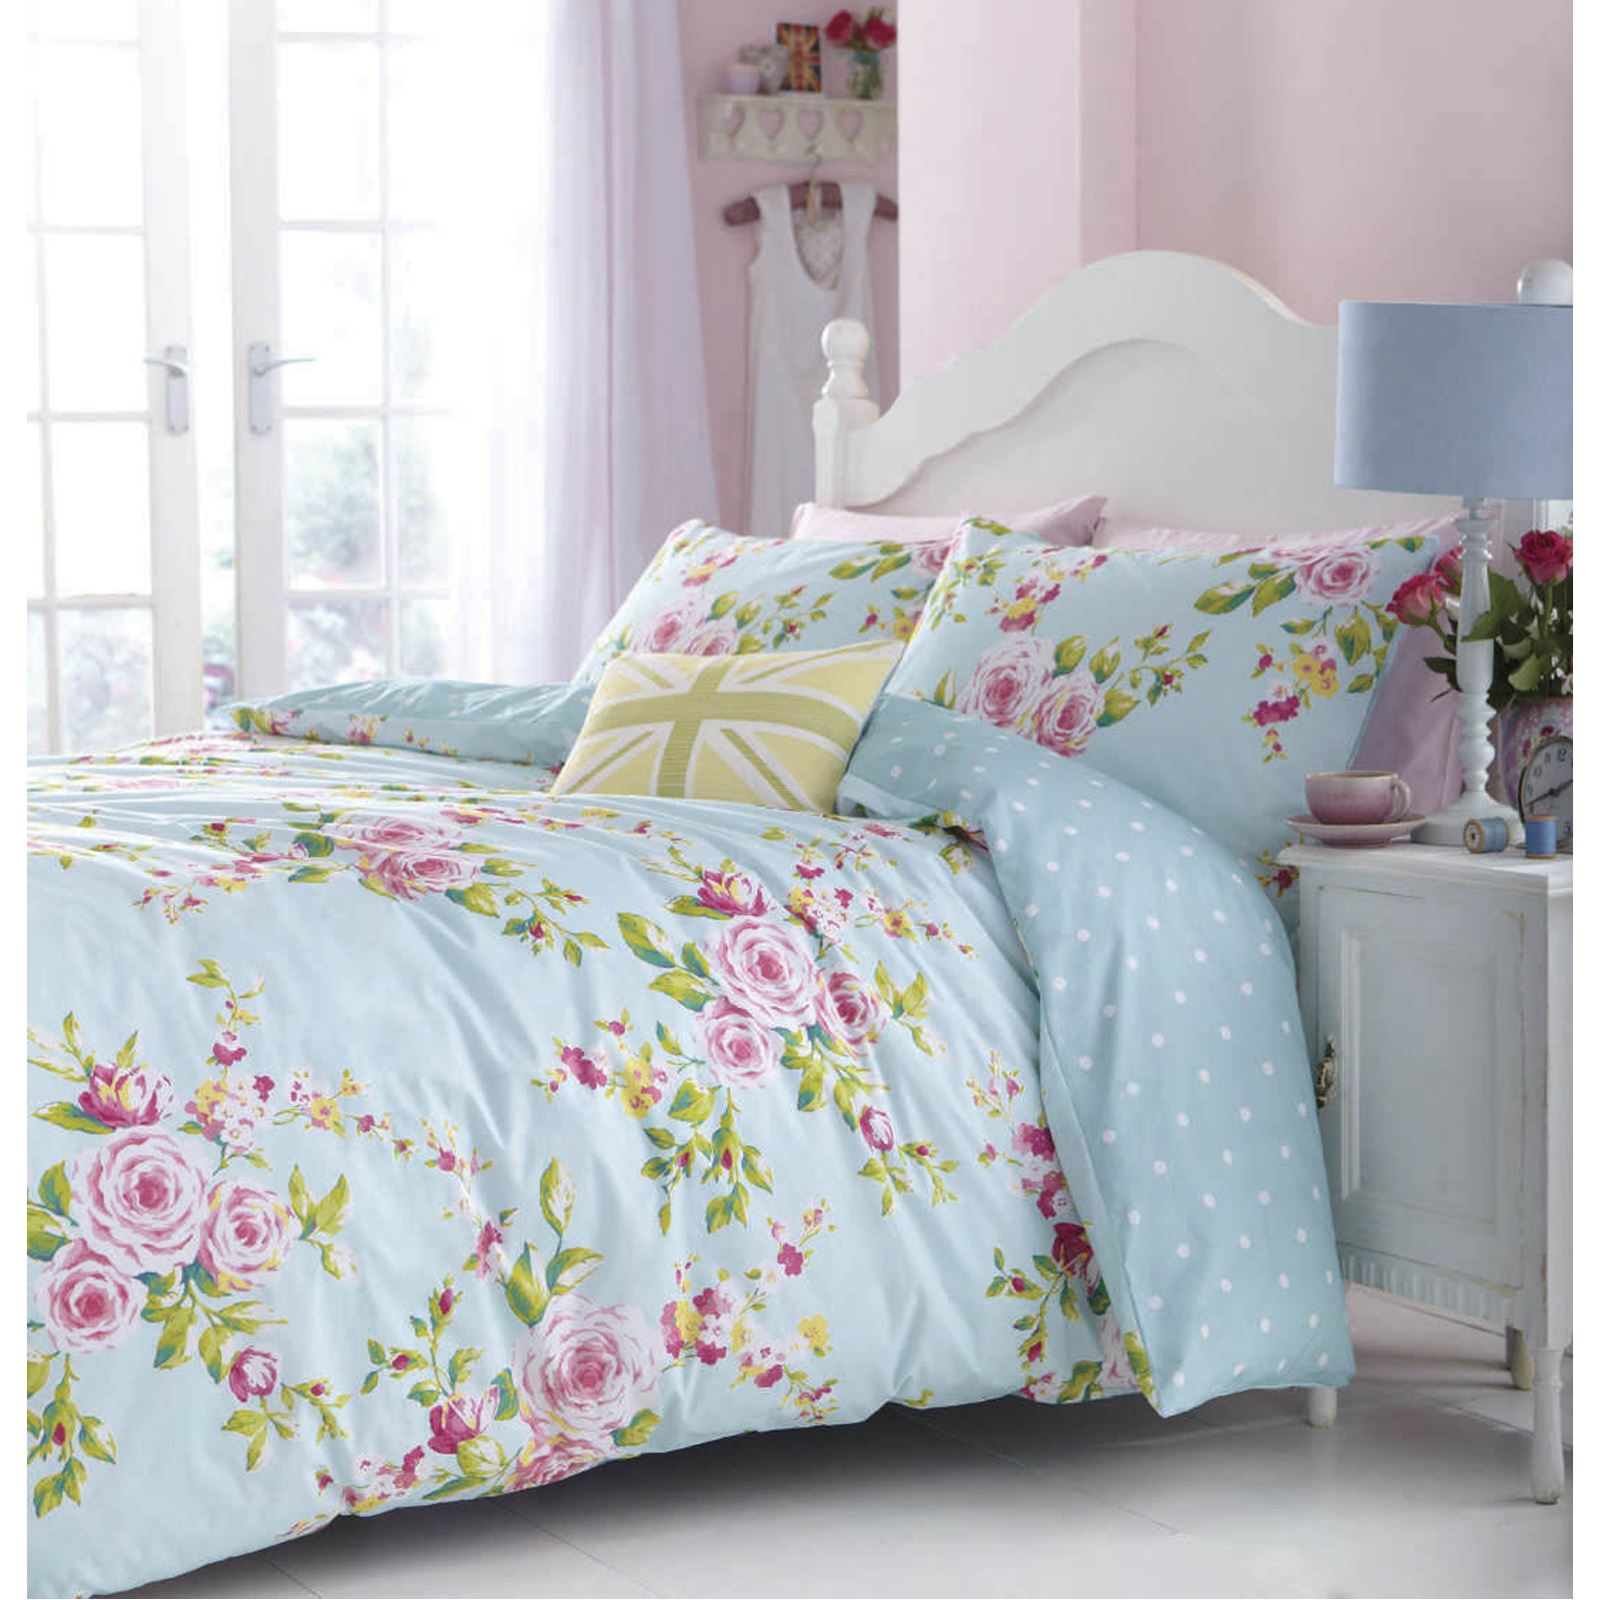 tottenham wallpaper for bedrooms,bedding,bed sheet,pink,bed,furniture